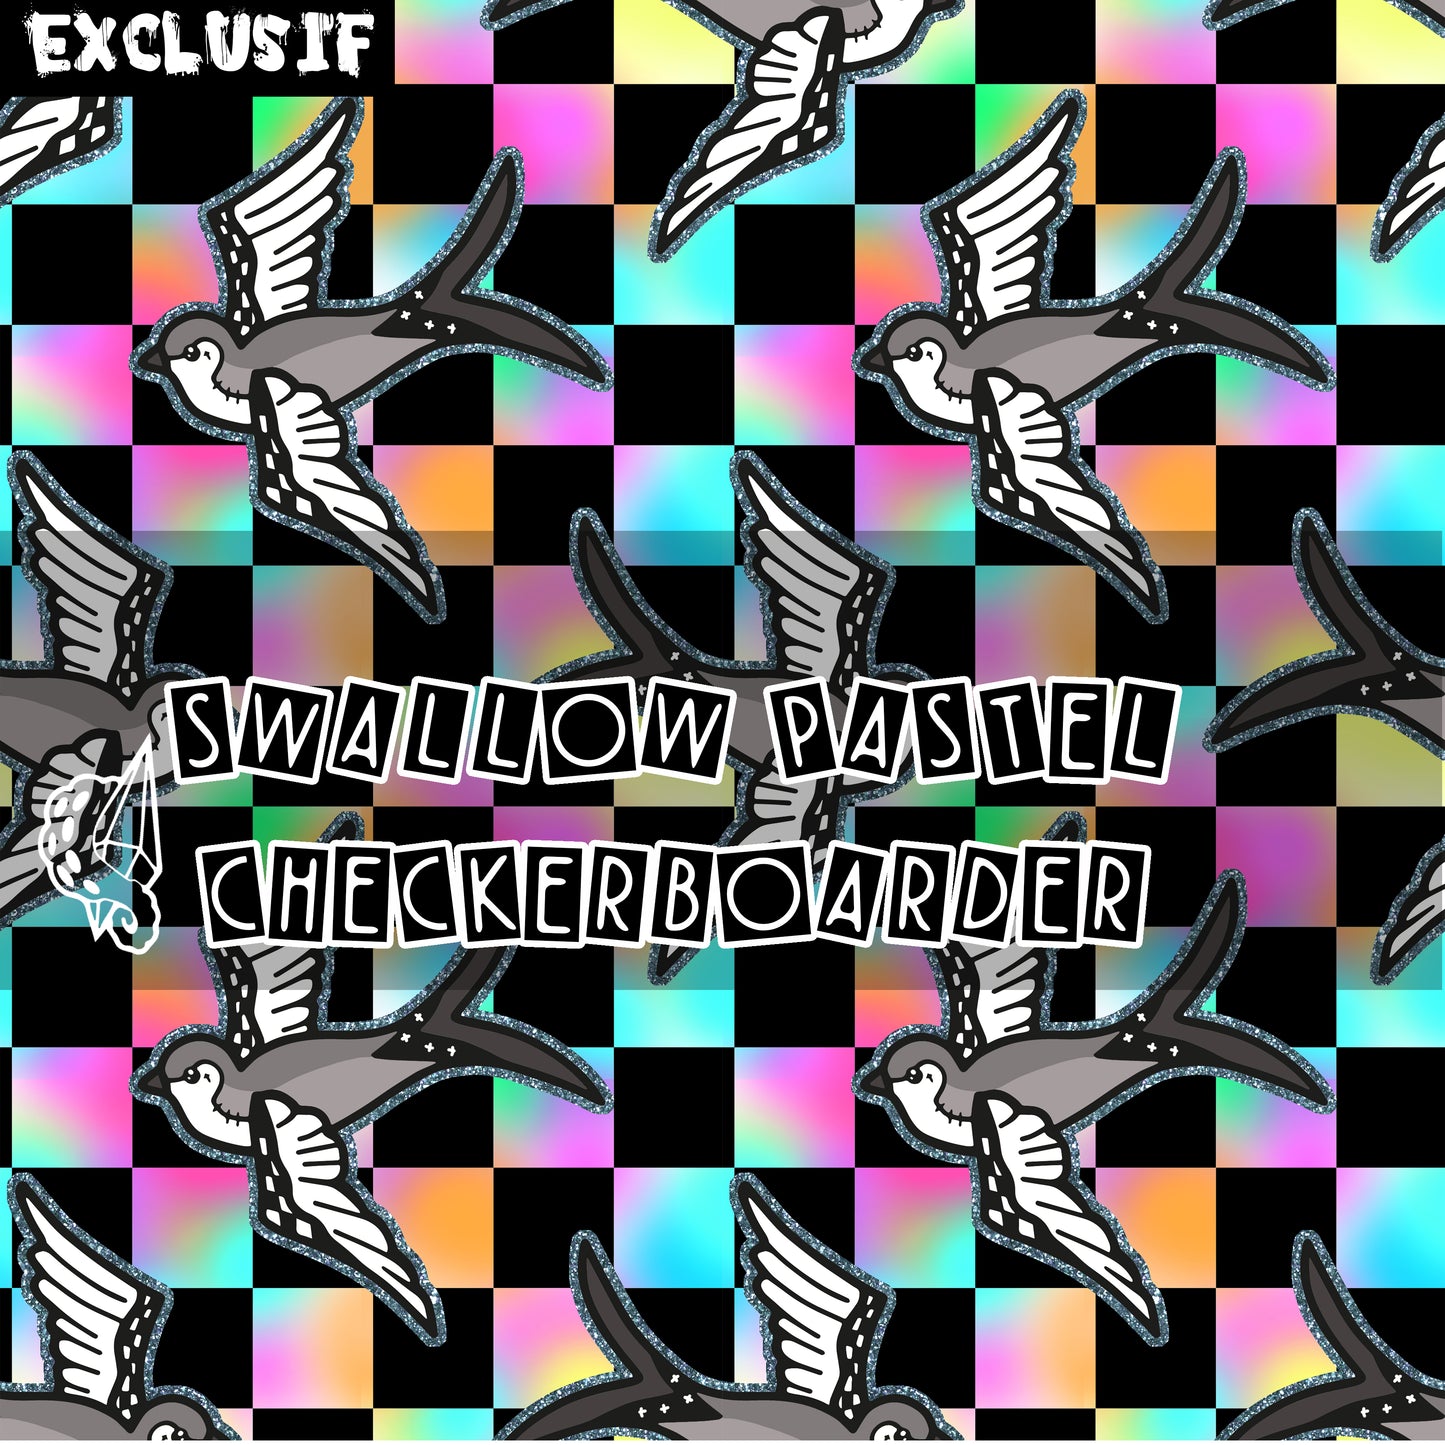 Swallow Pastel Checkerboarder